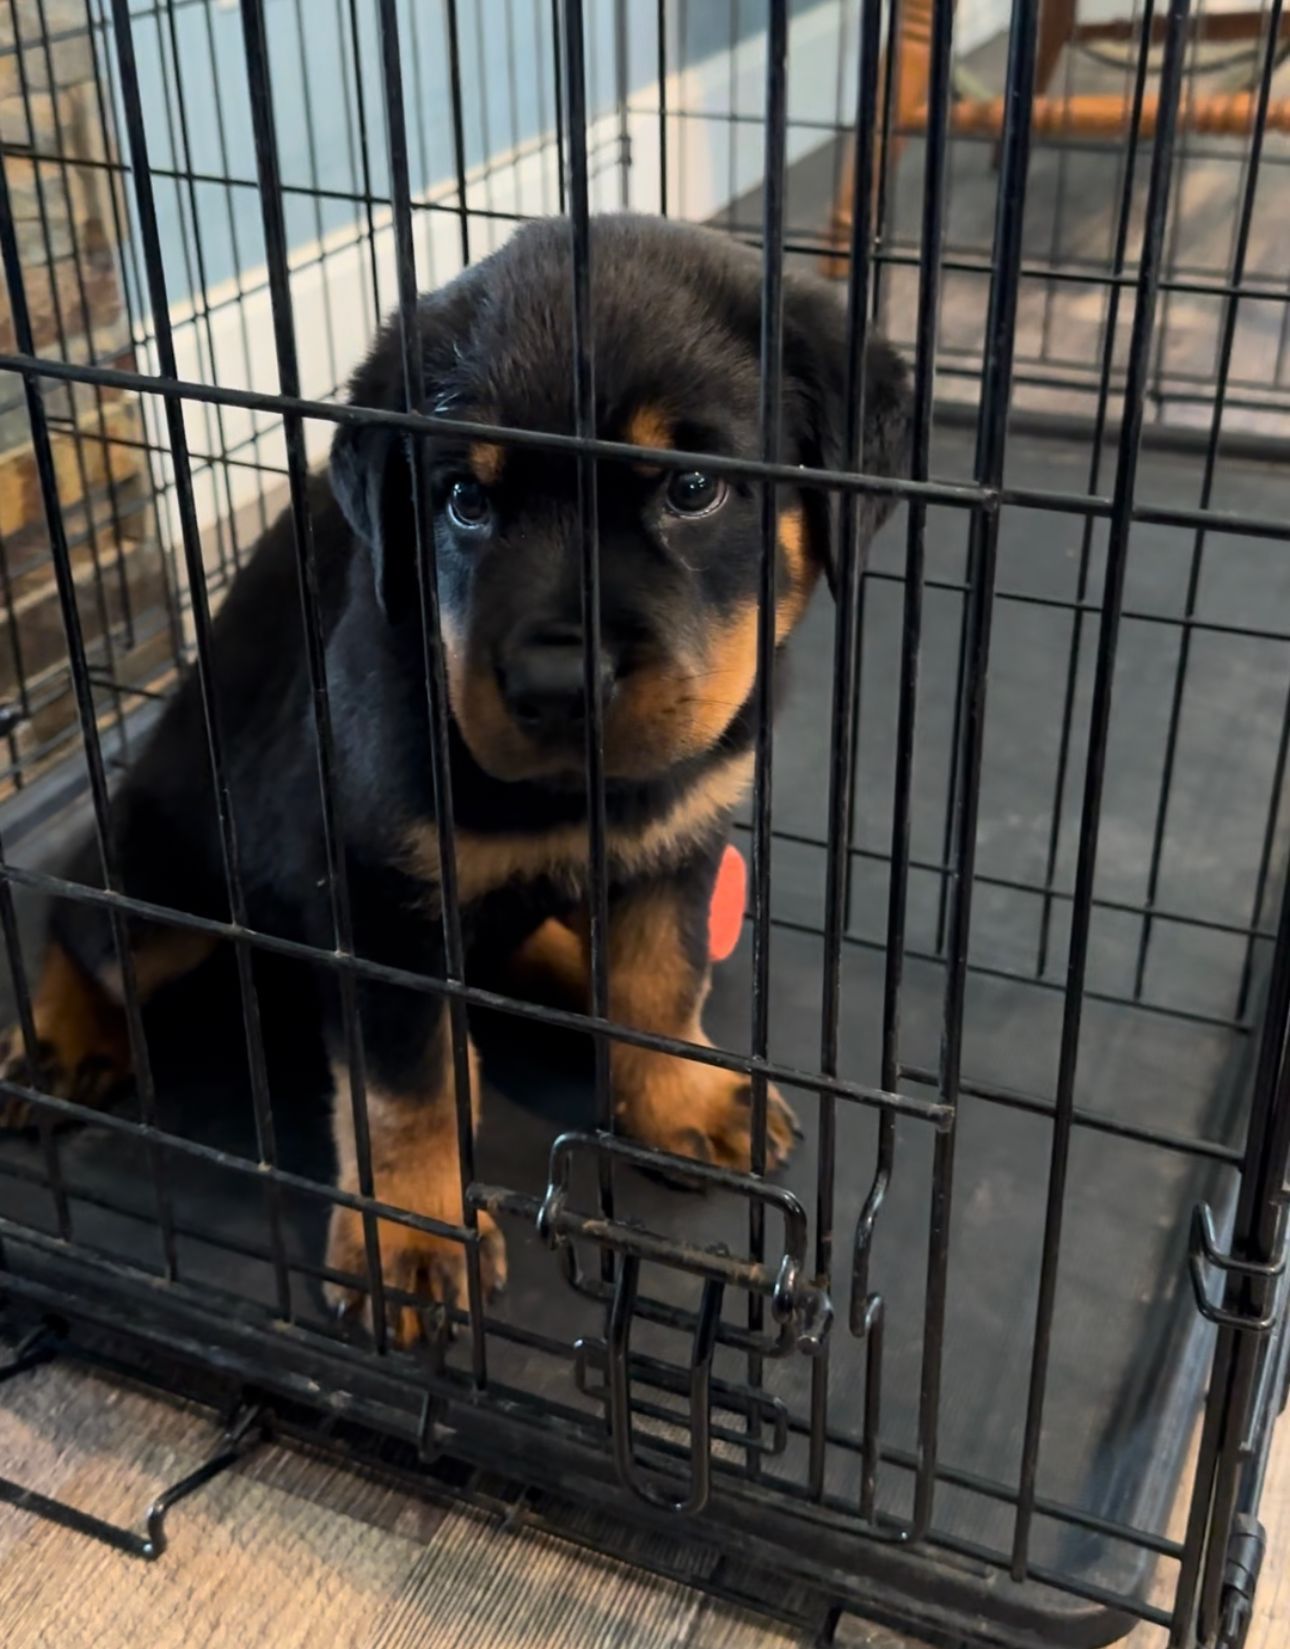 Puppy in a wire kennel